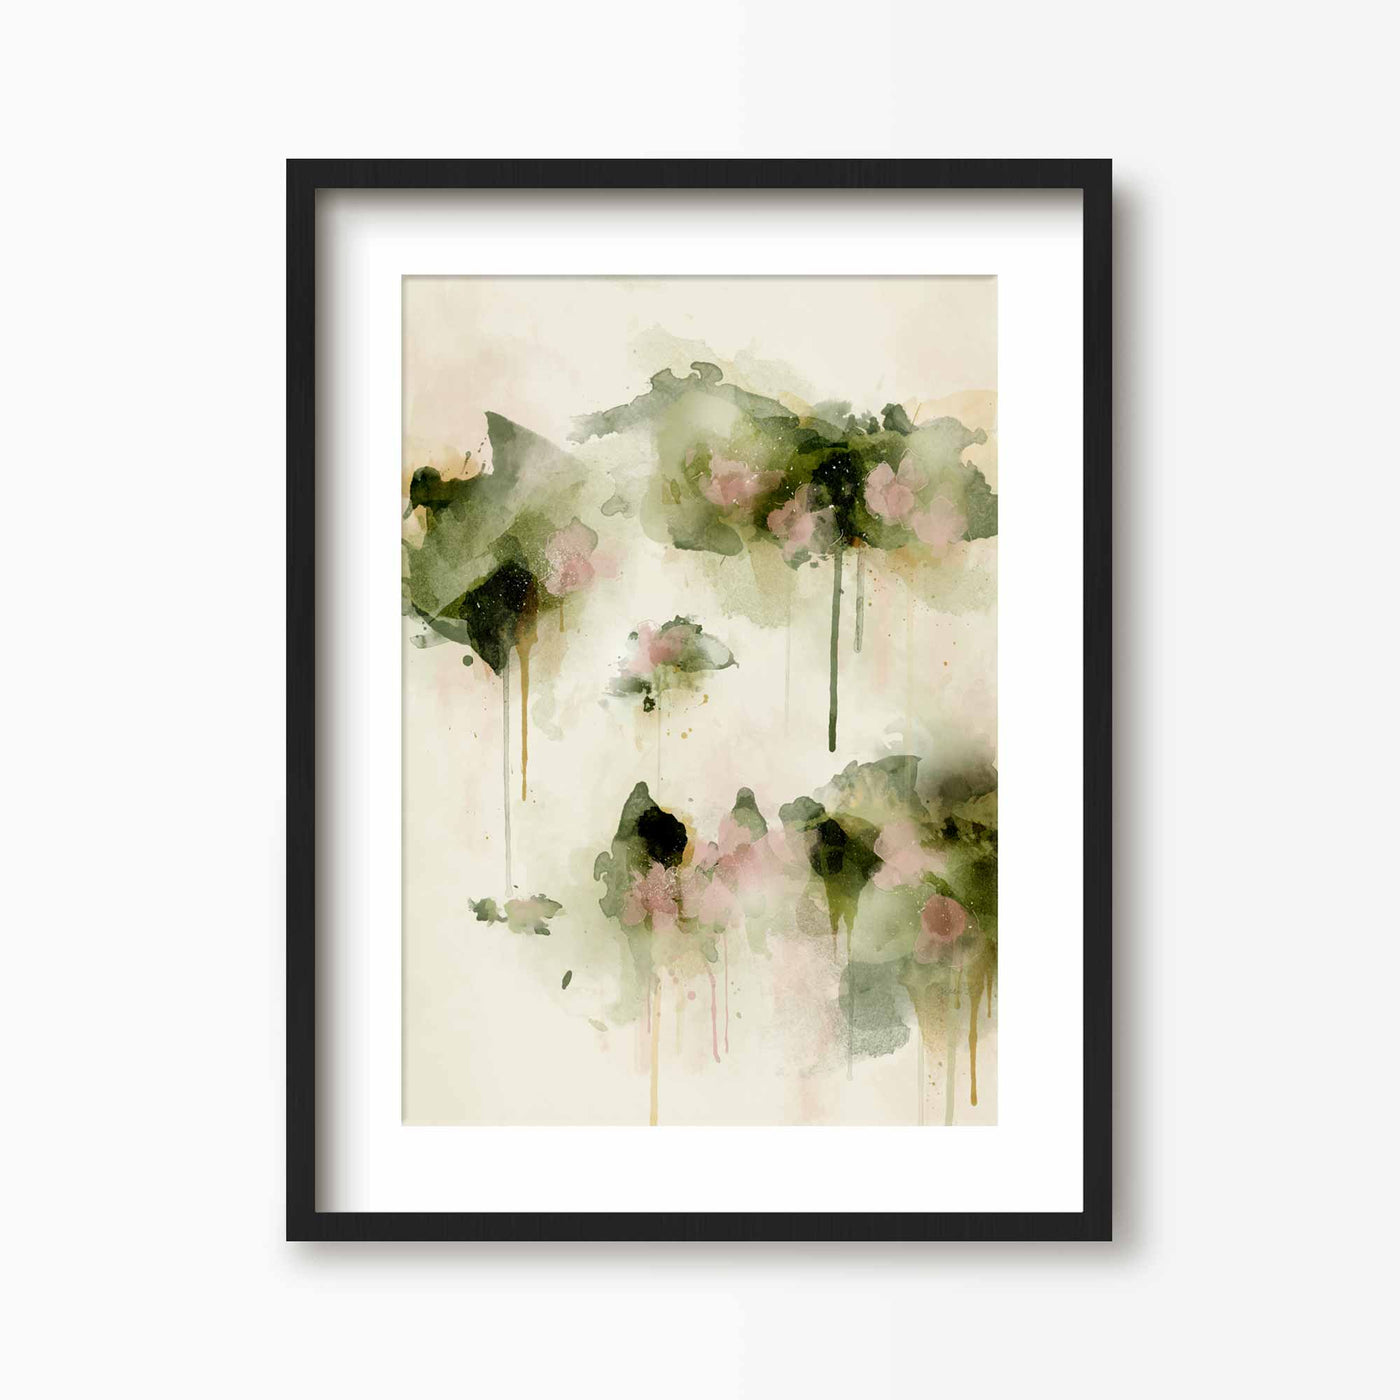 Green Lili 30x40cm (12x16") / Black Frame + Mount Summer Days Abstract Floral Print